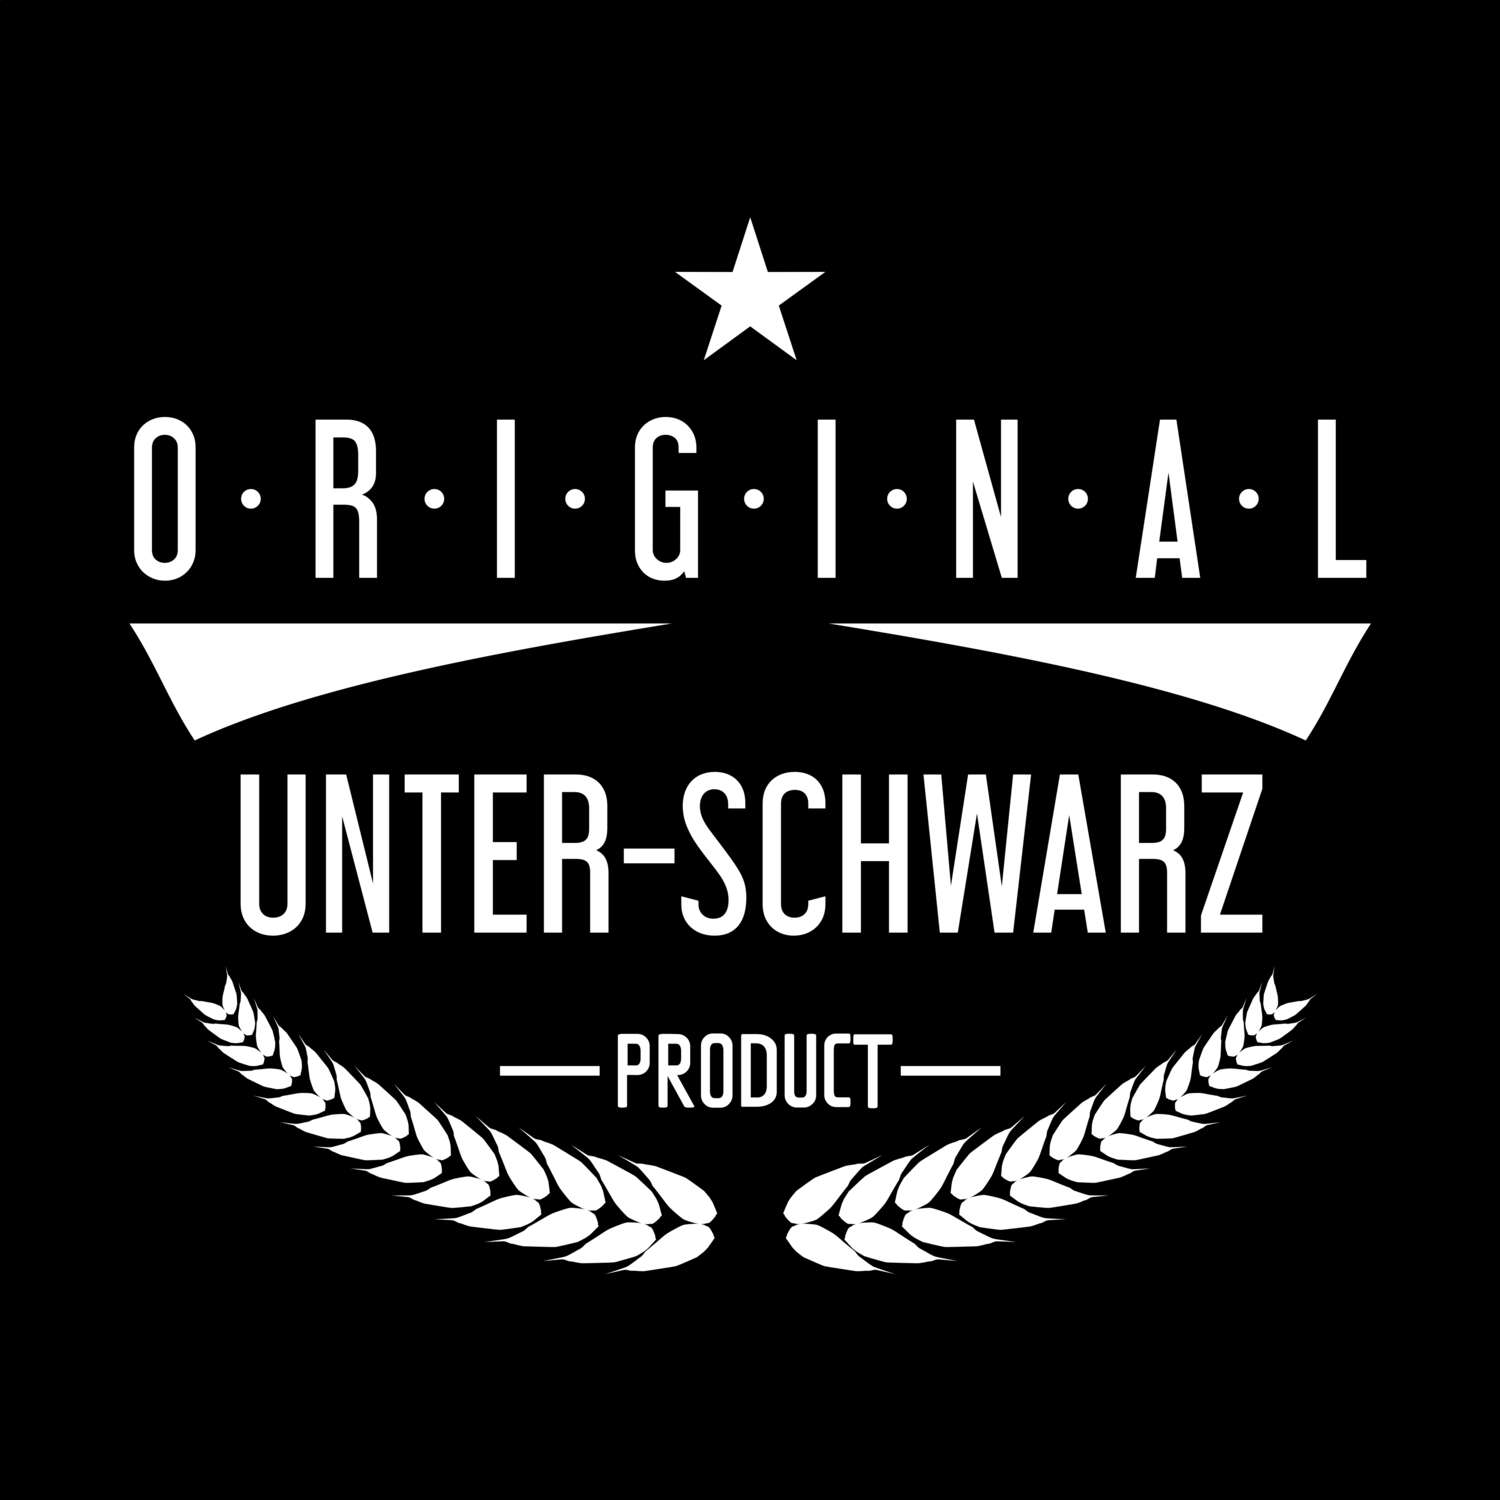 Unter-Schwarz T-Shirt »Original Product«